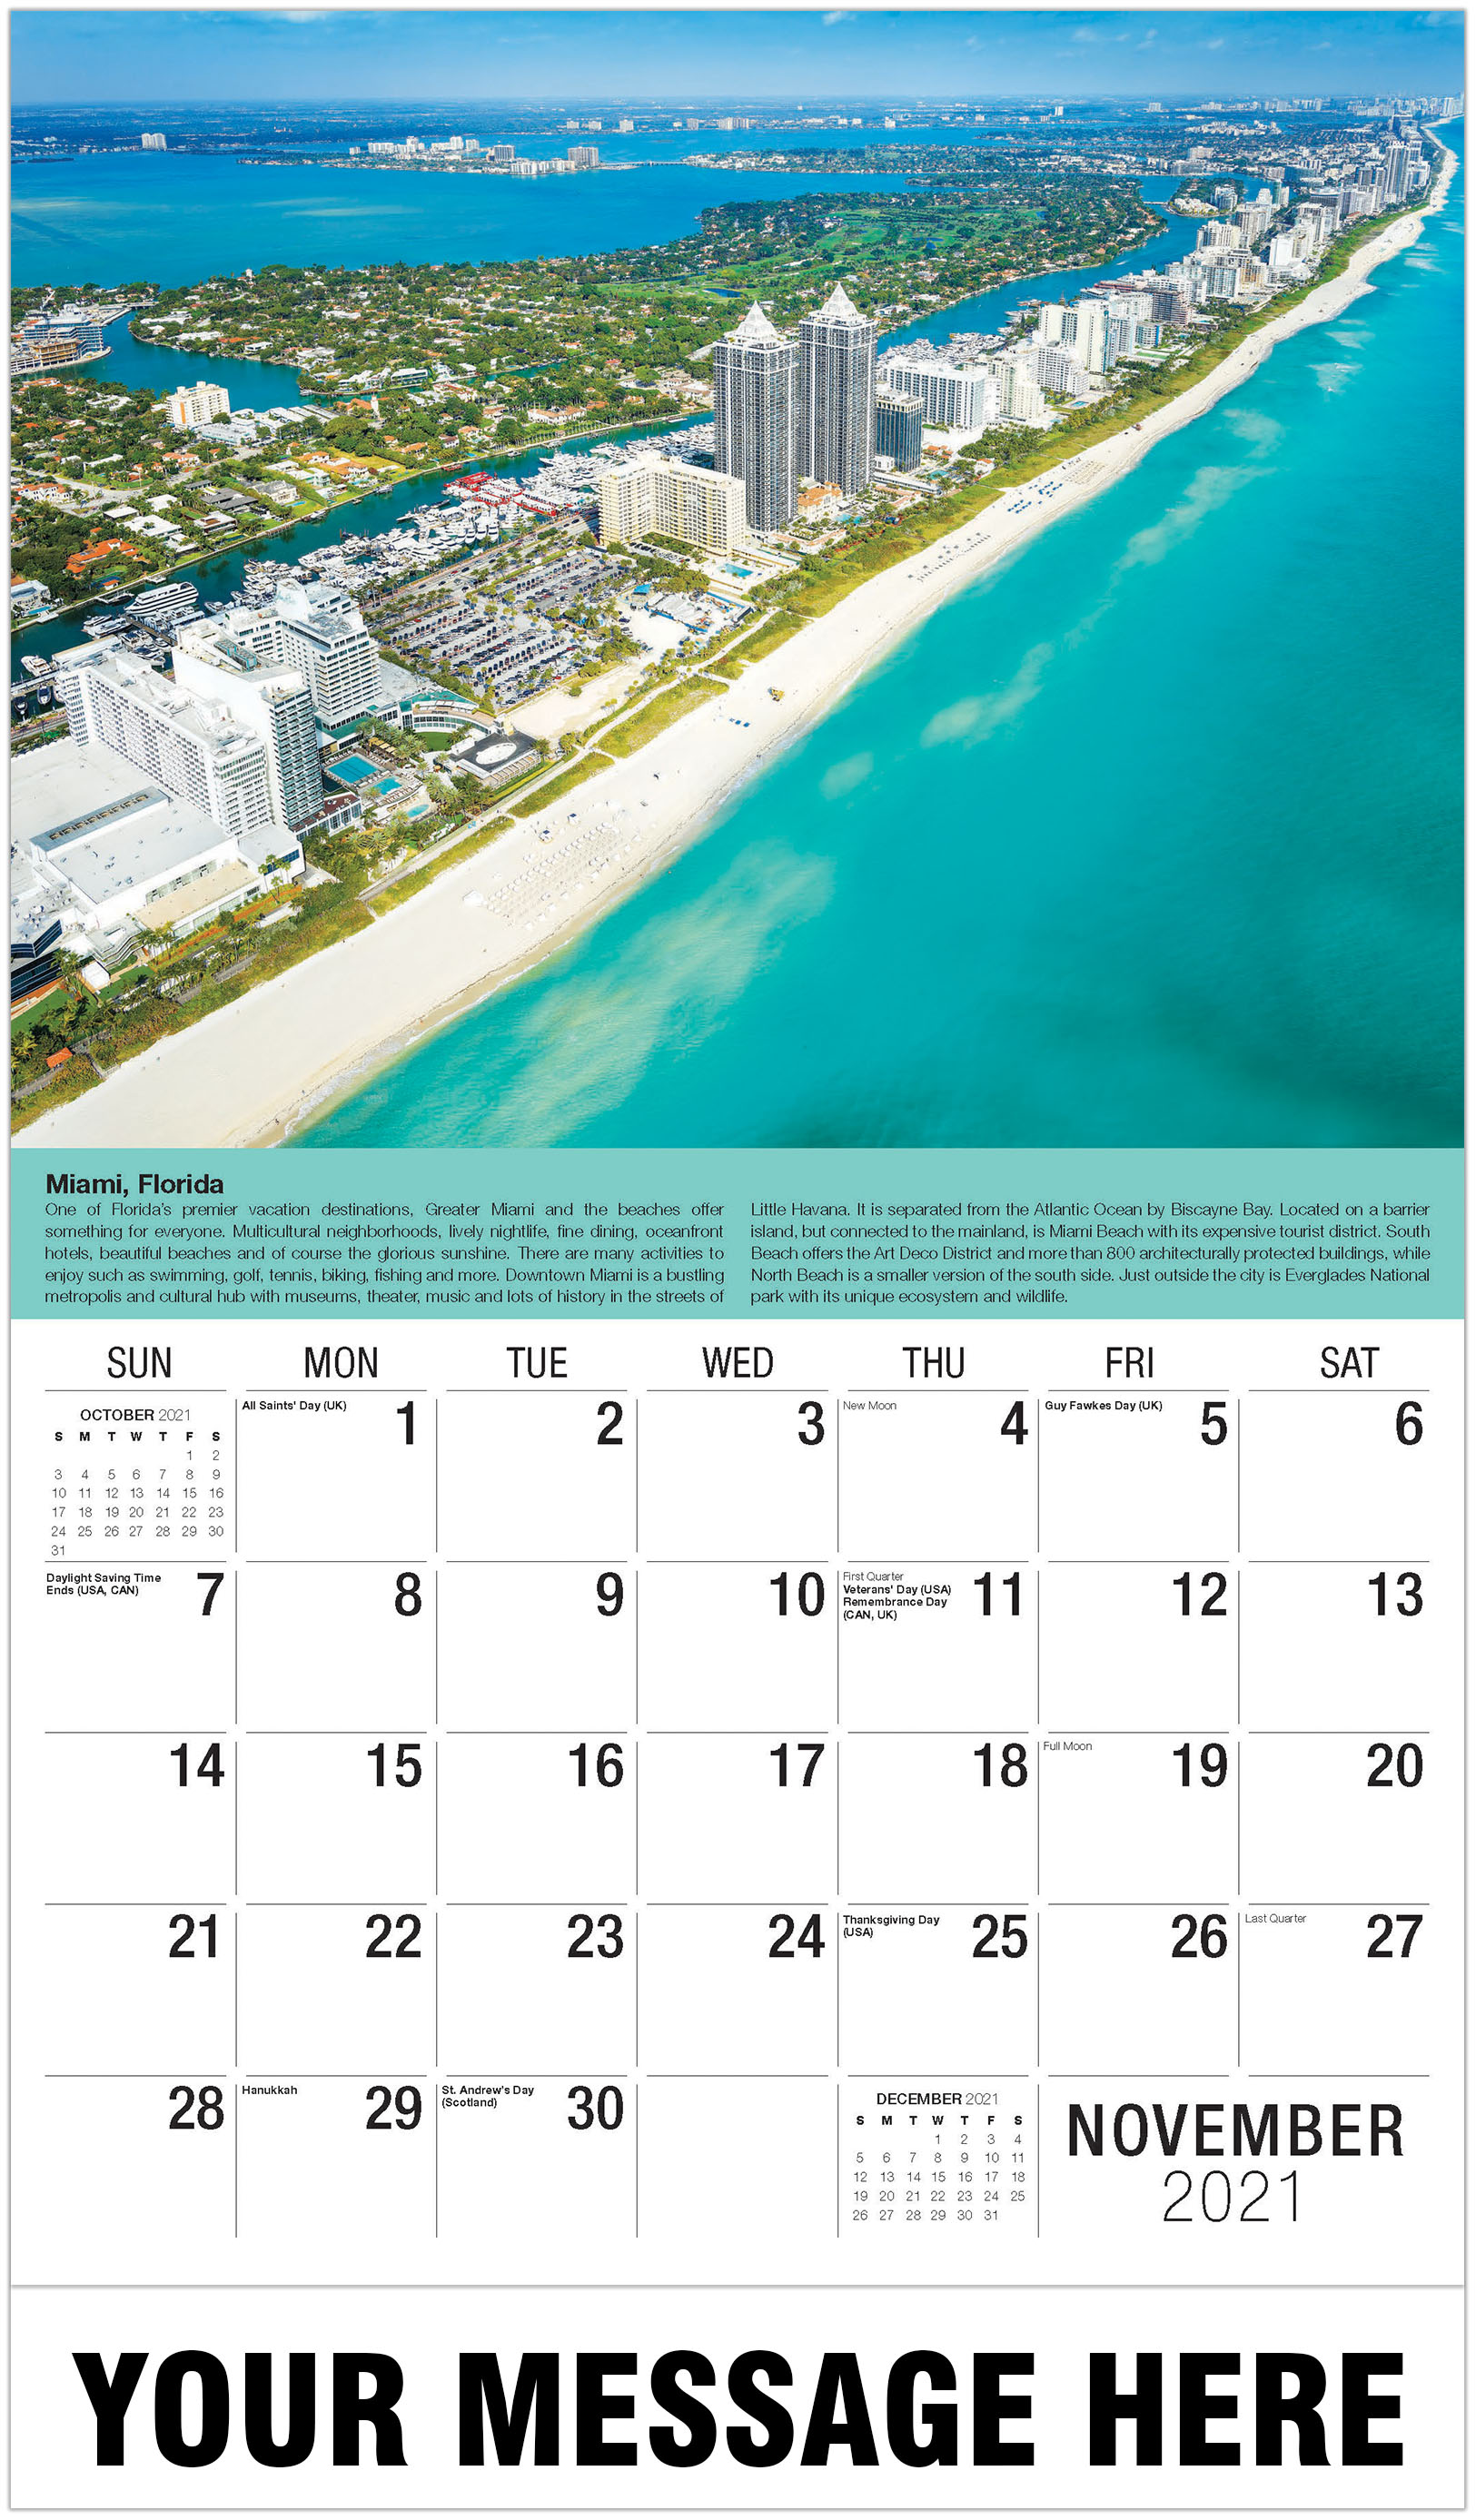 Travel Destinations of the World 2021 Business Promo Calendar